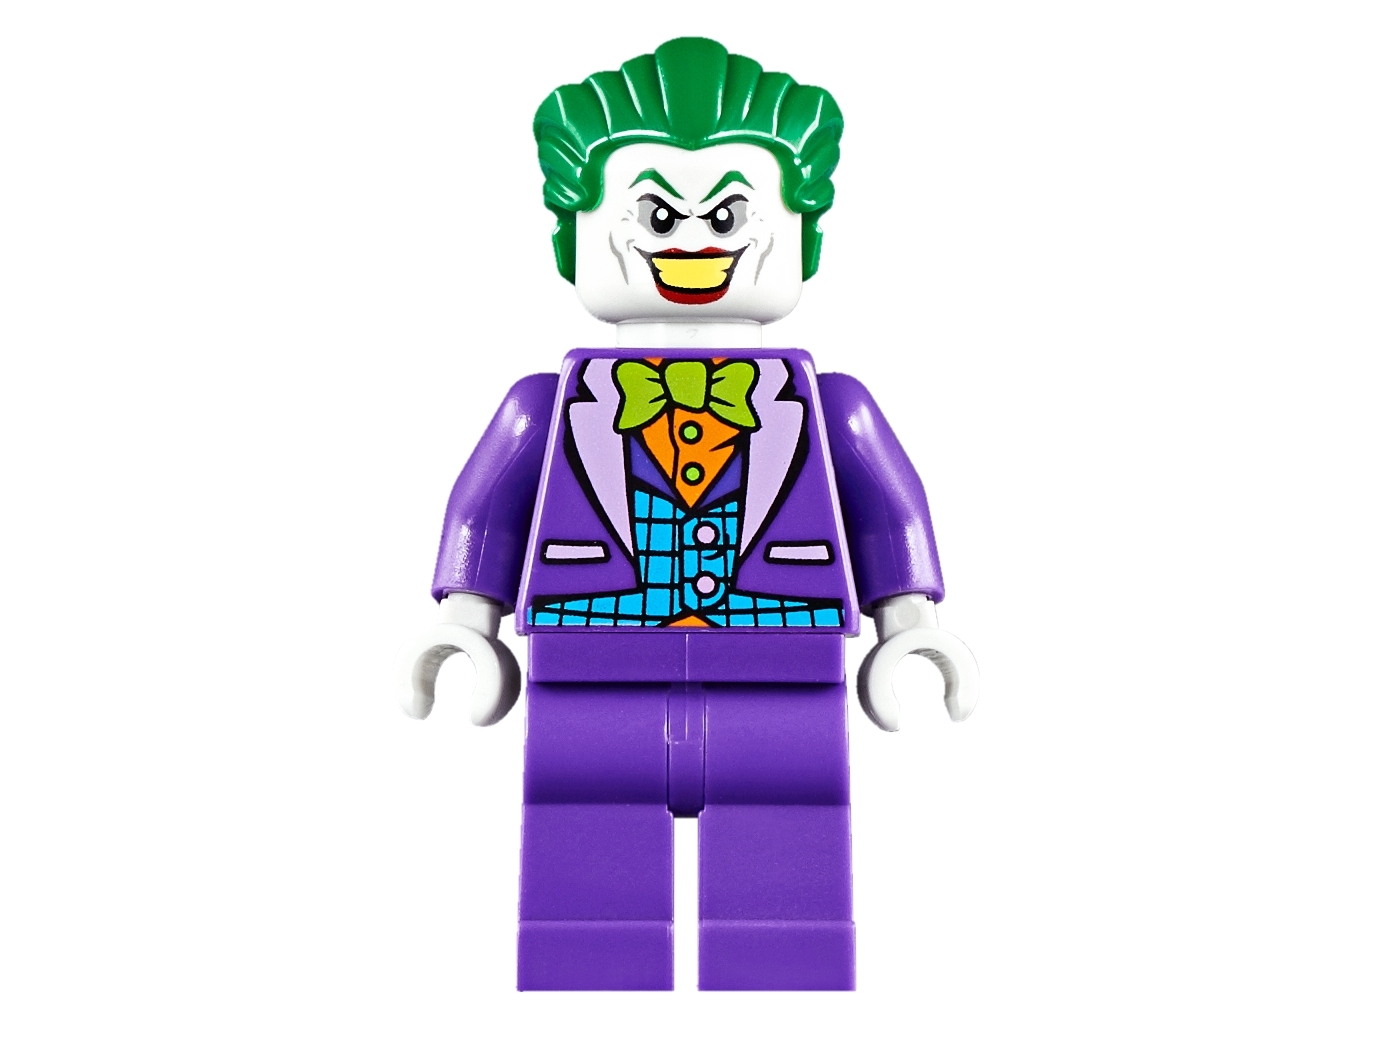 LEGO 4+ DC The Joker Batcave Attack 10753 Building Set